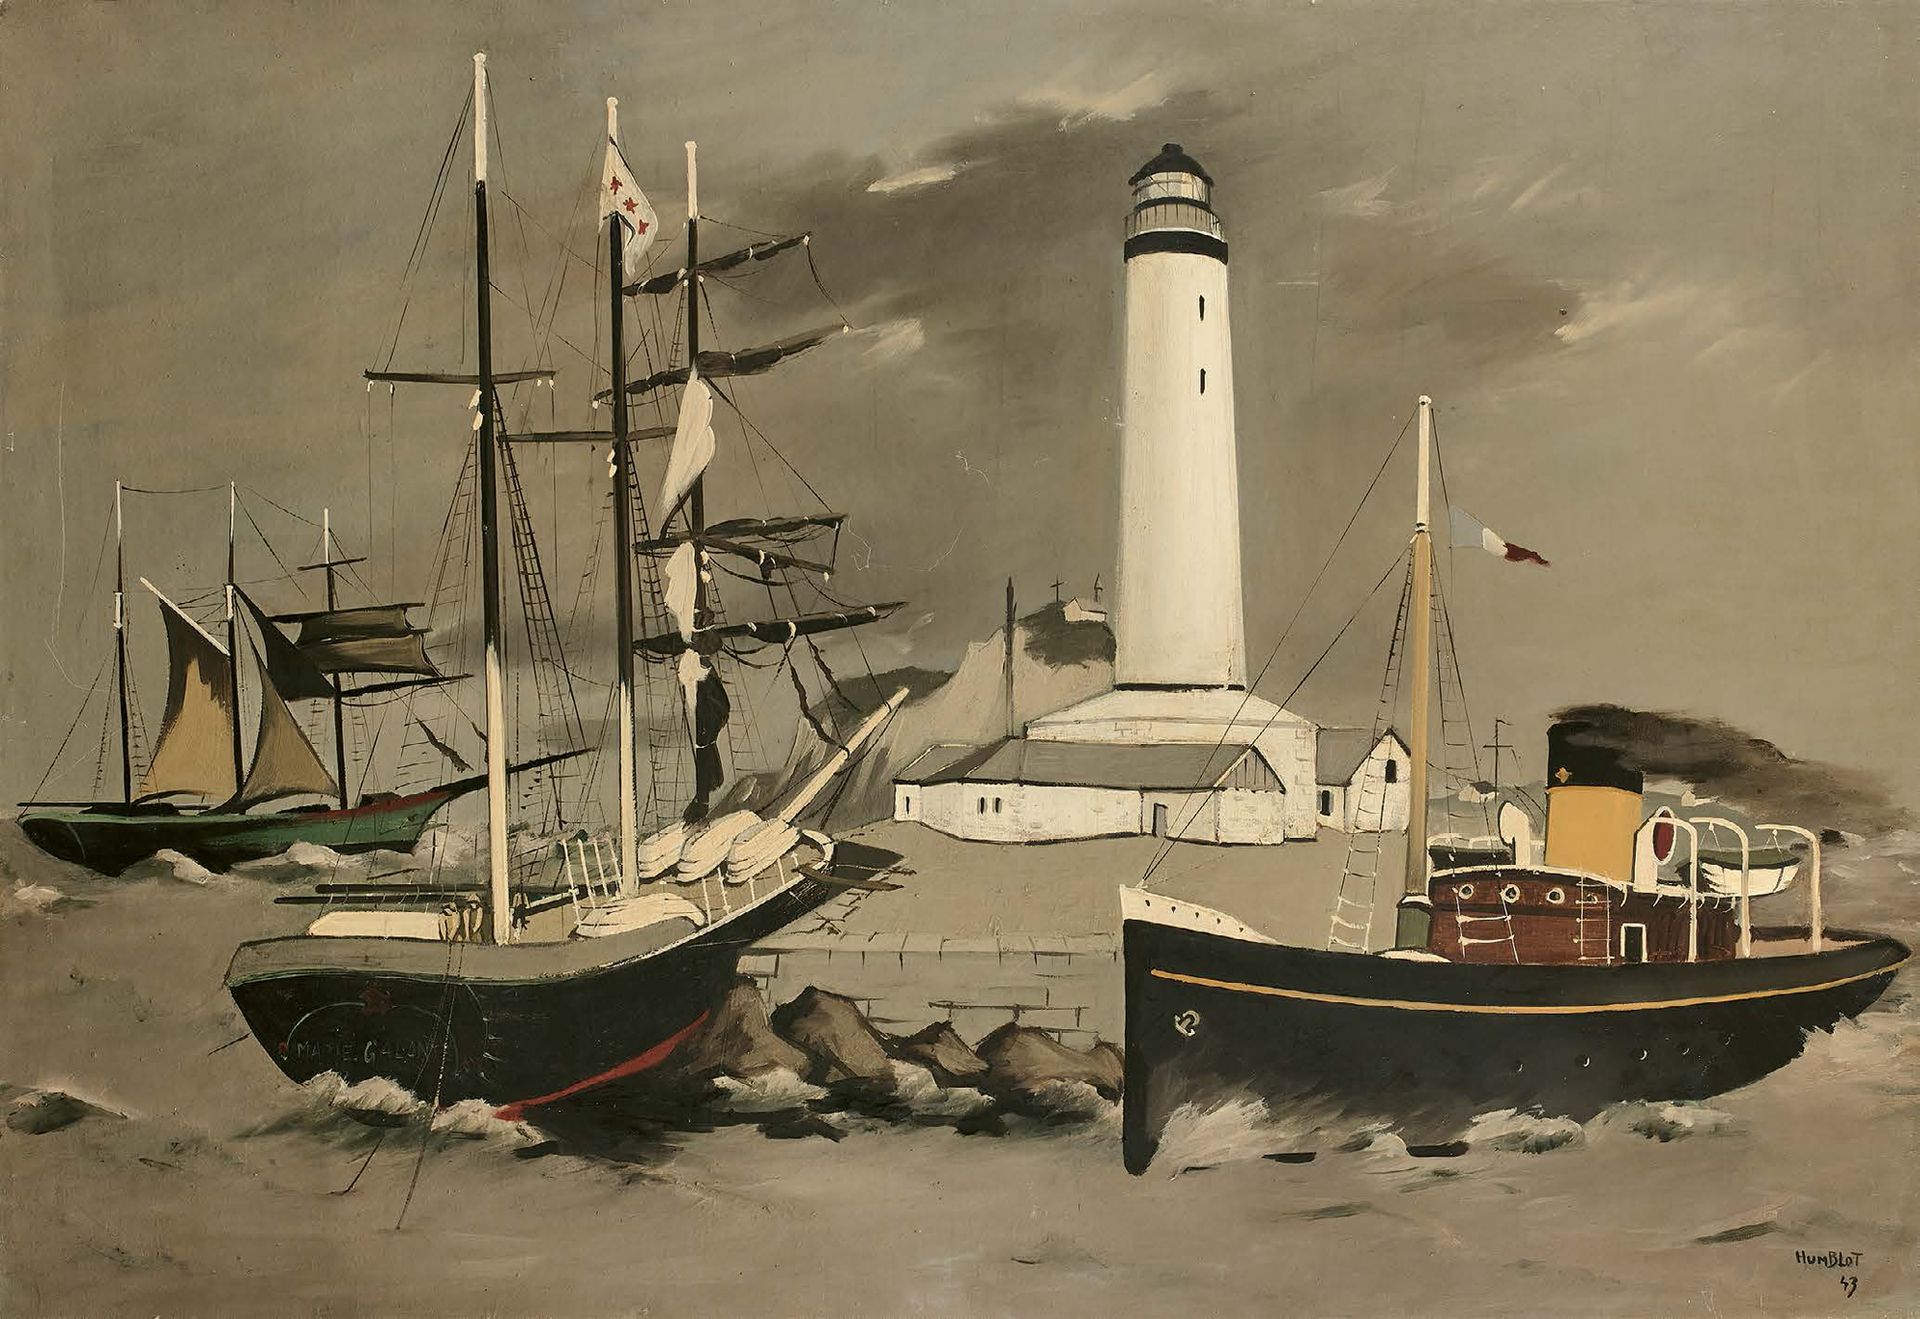 Robert HUMBLOT (1907-1962) 无题，1943年
布面油画，右下方有签名和日期。
90 x 130 cm